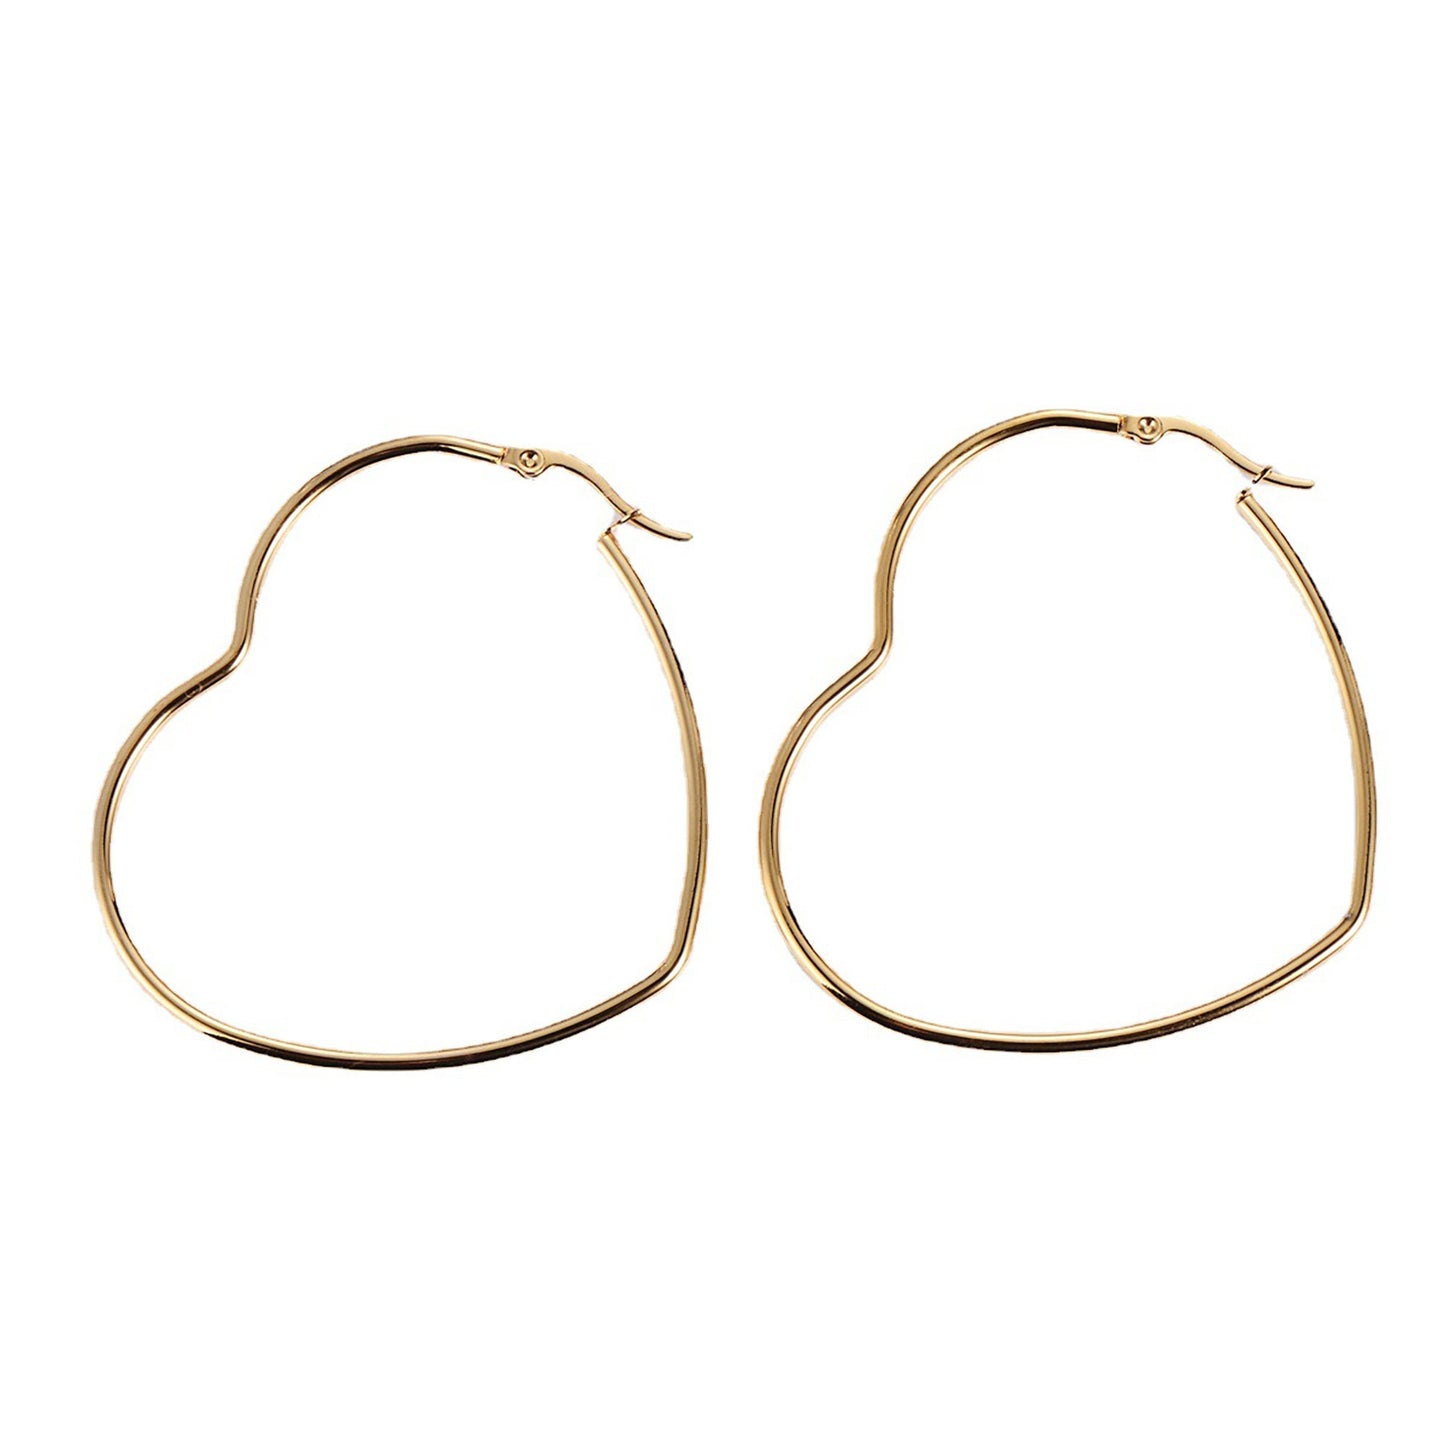 Titanium 5cm Large Heart Hoop Earrings, Gold Plated, Hypoallergenic, Implant Grade Titanium Waterproof, Vintage Style, Minimal